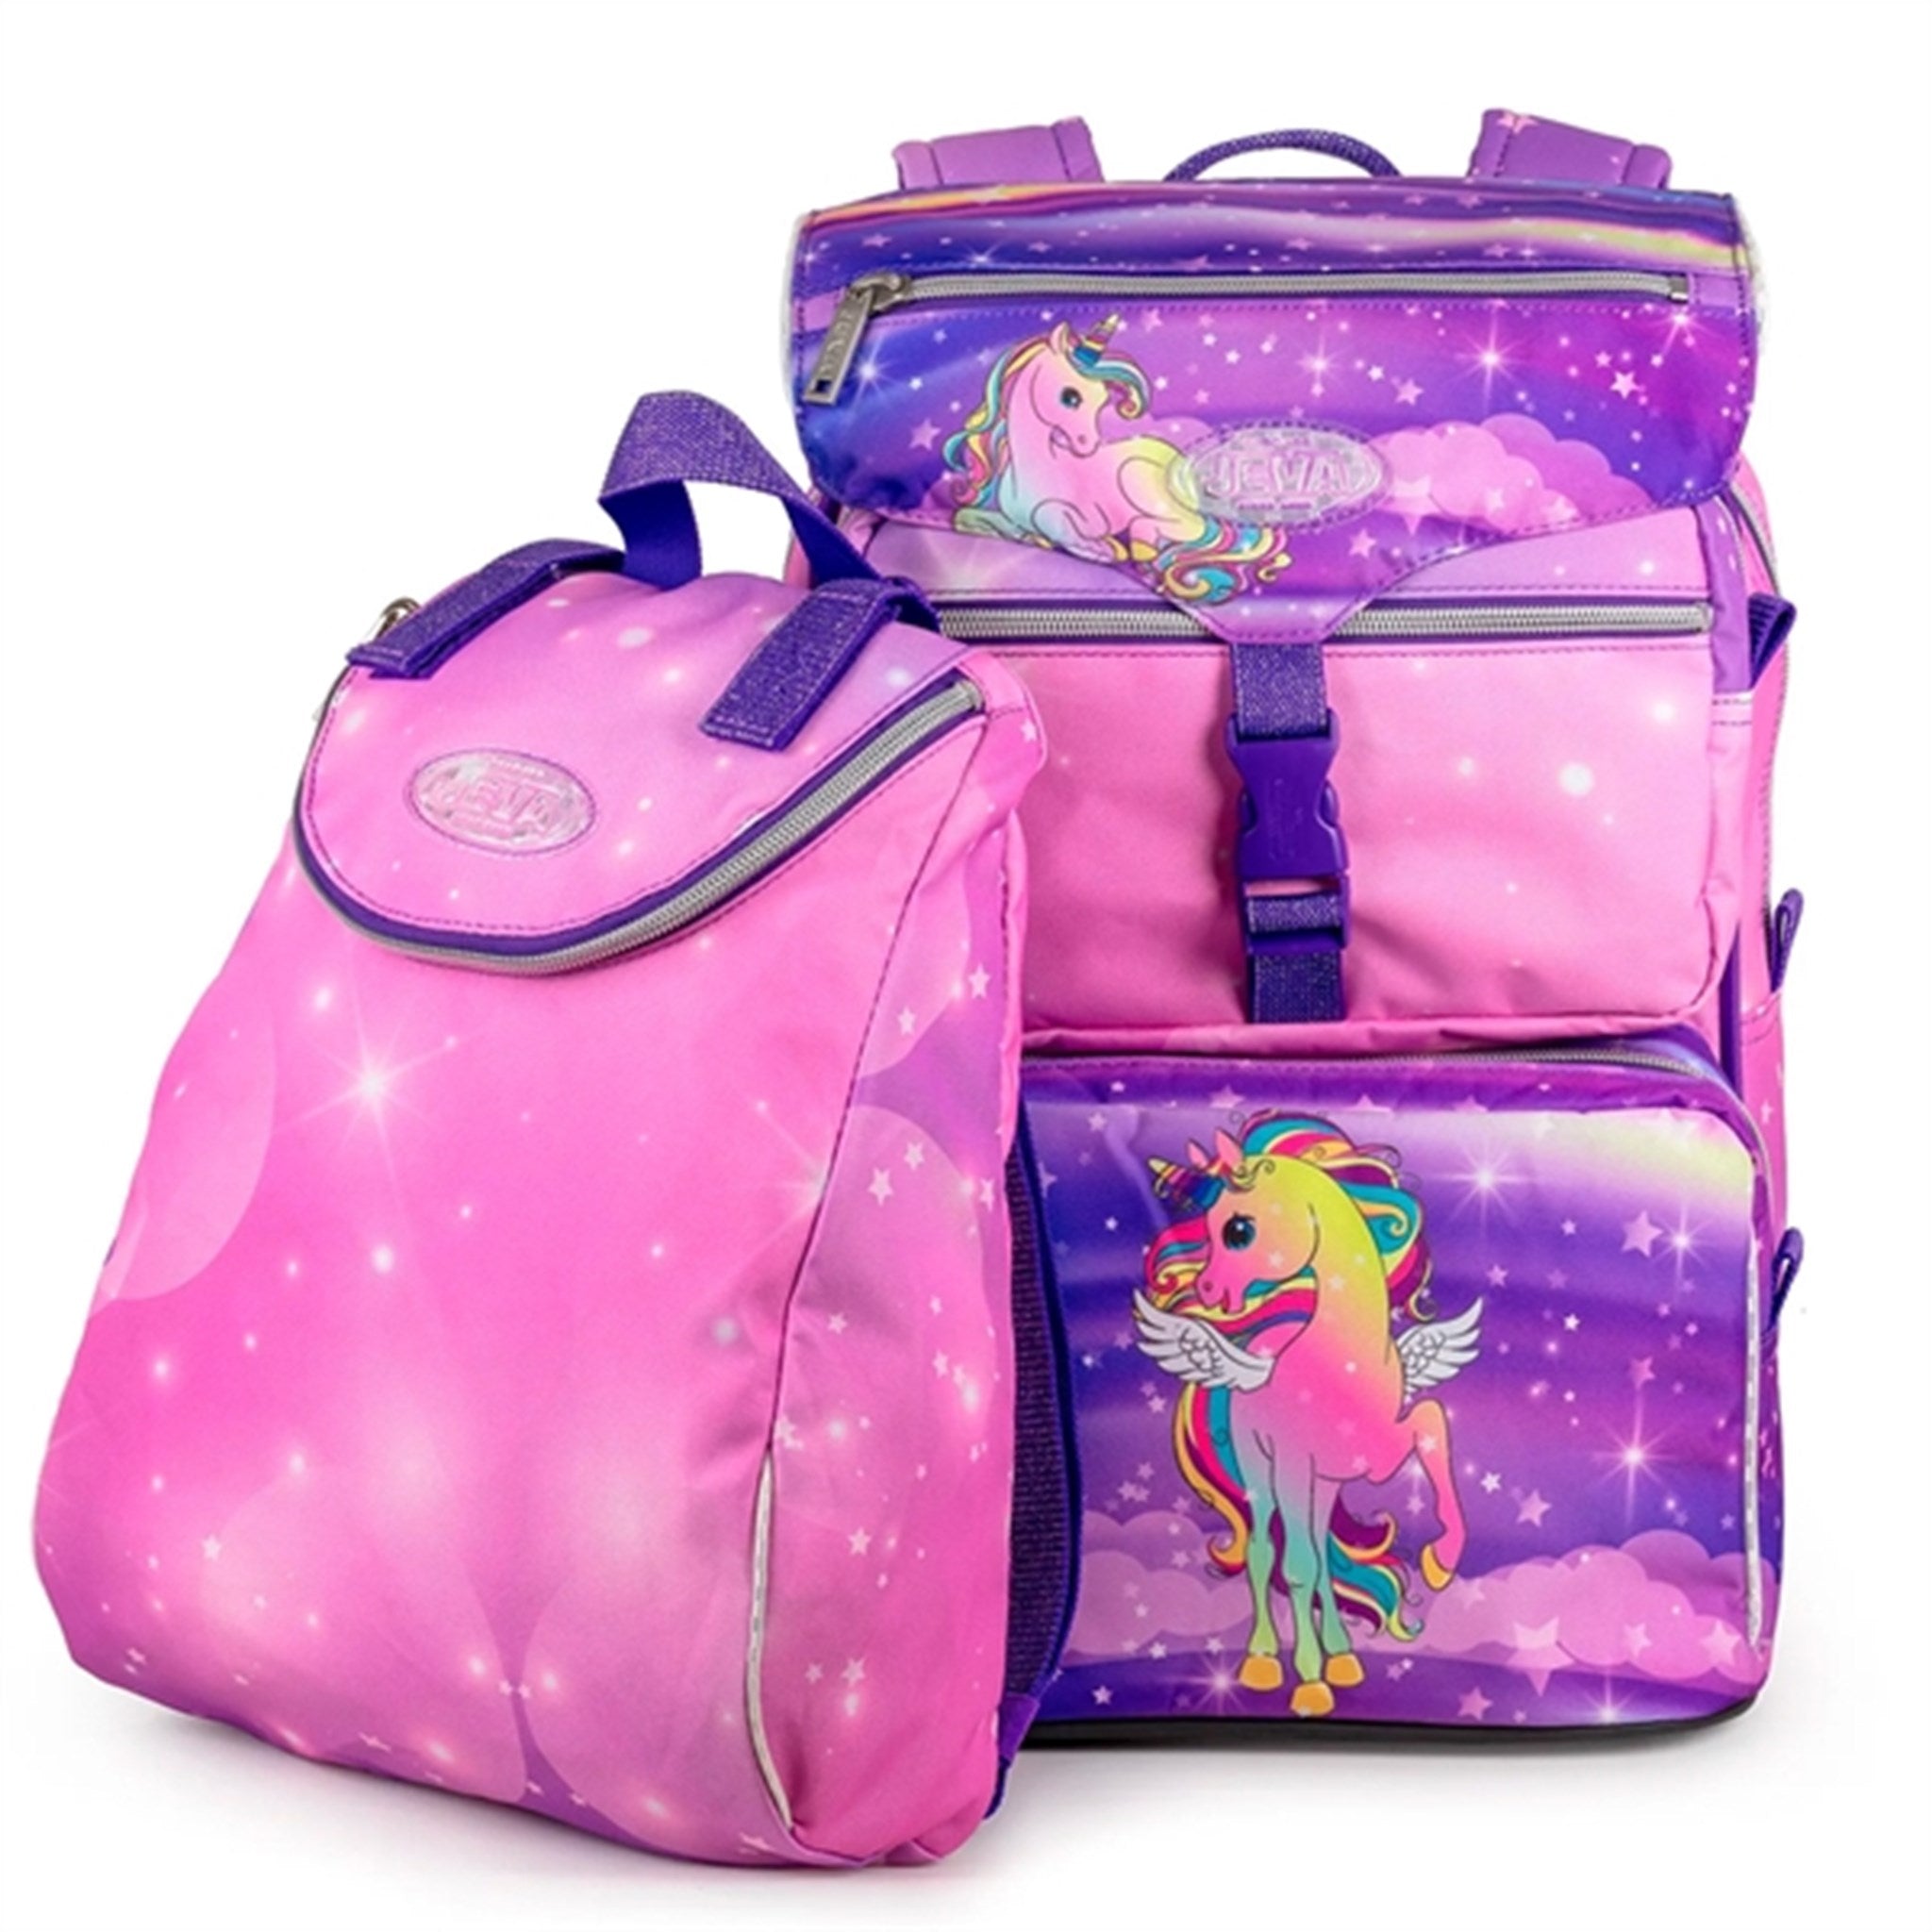 JEVA School Bag Rainbow Alicorn